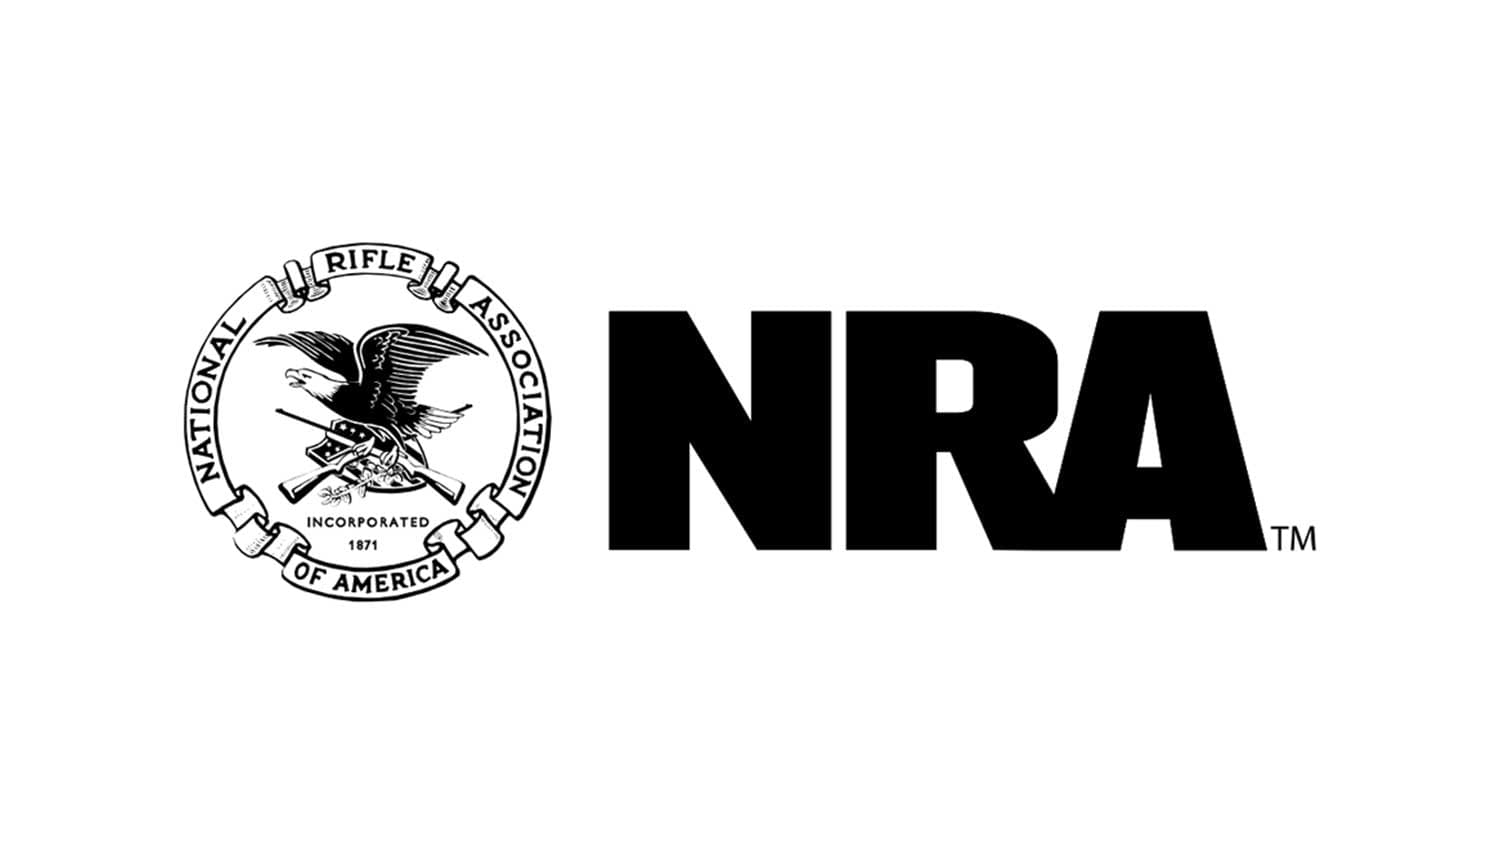 Women For Gun Rights Logo (1)